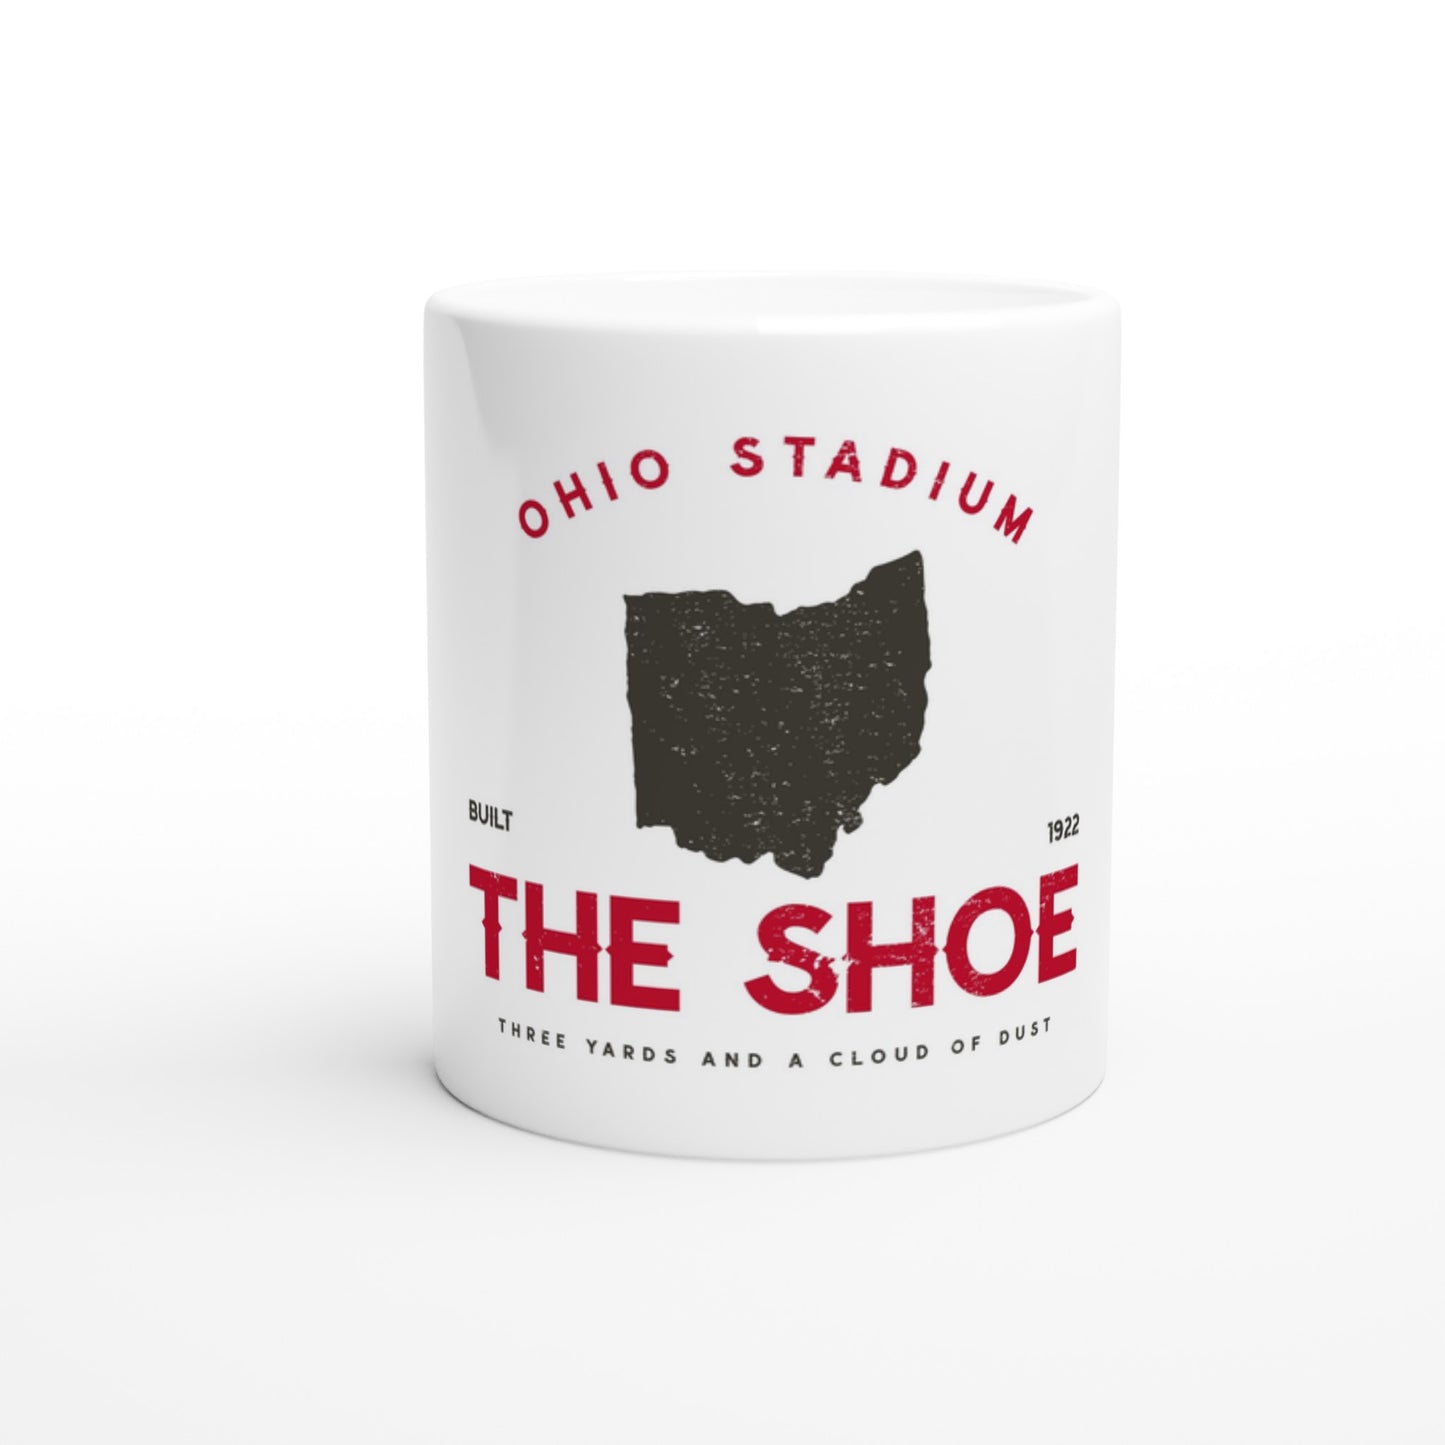 The Shoe Design on White 11oz Ceramic Mug